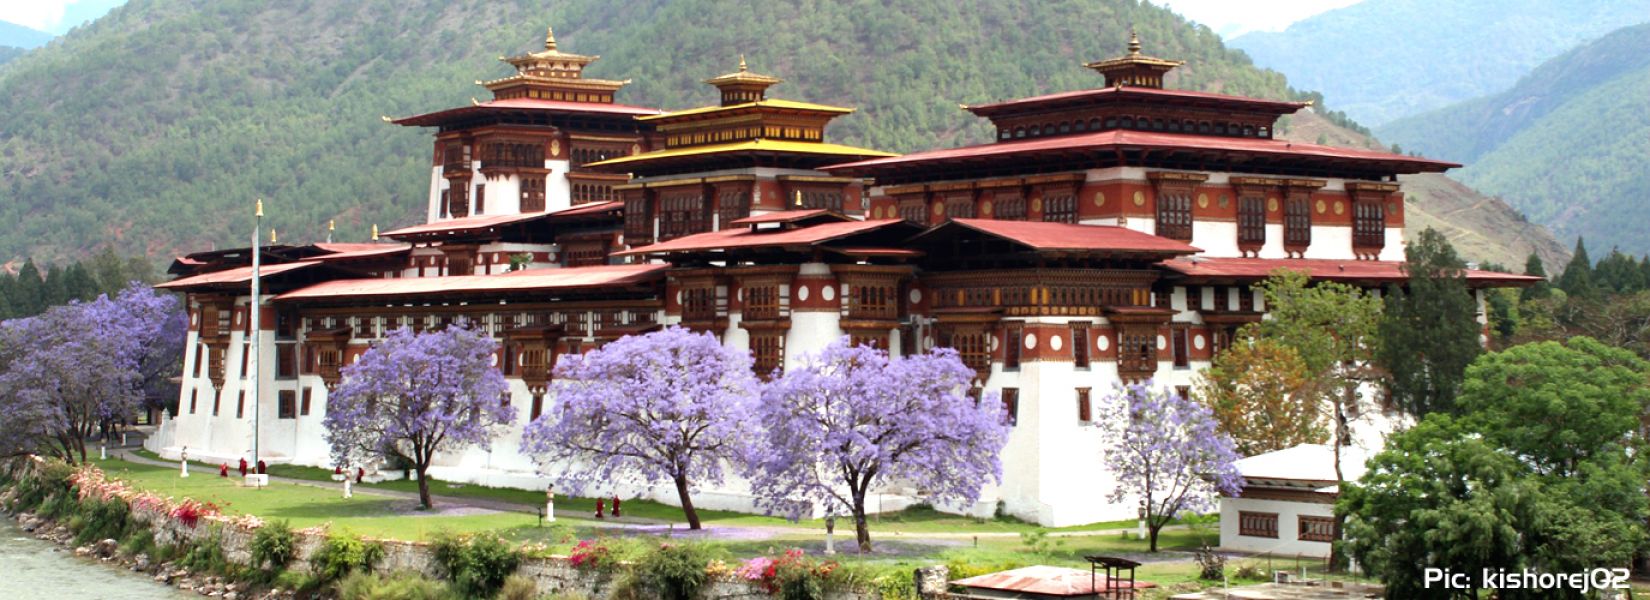 Explore Bhutan